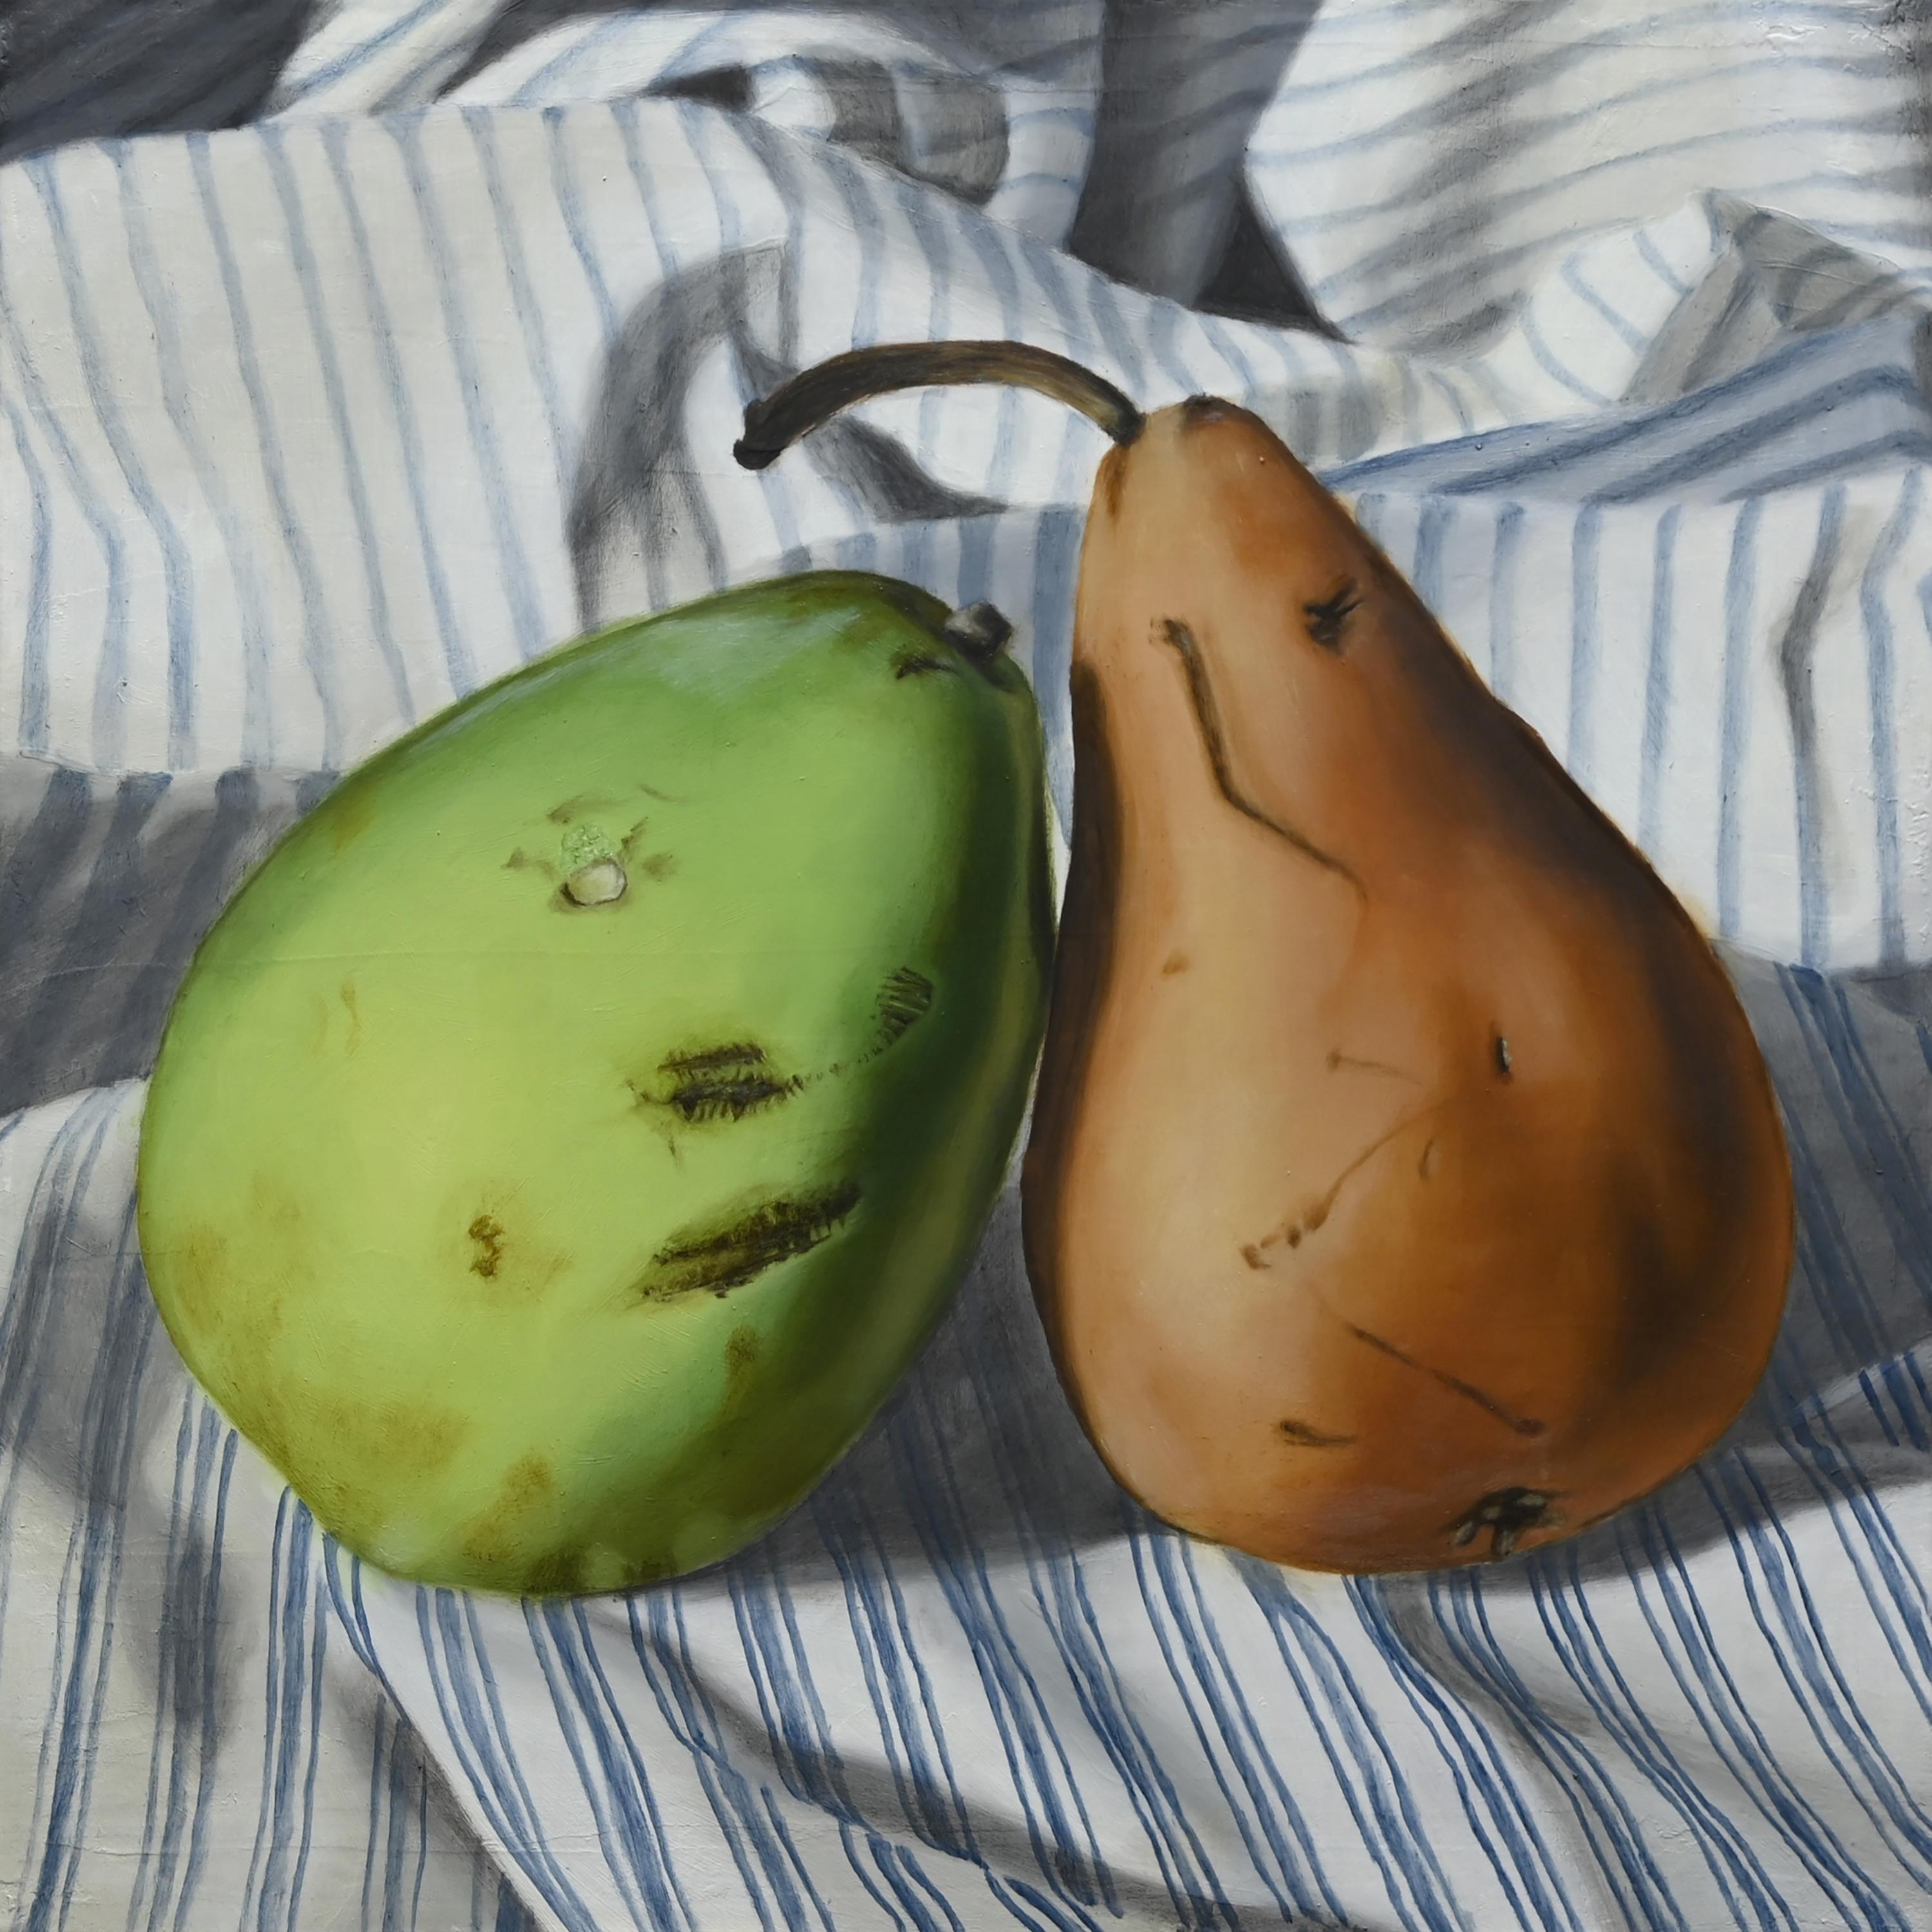 Jordan Baker Still-Life Painting - "Odd Couple" - still life with pears - striped - realism - Raphaelle Peal